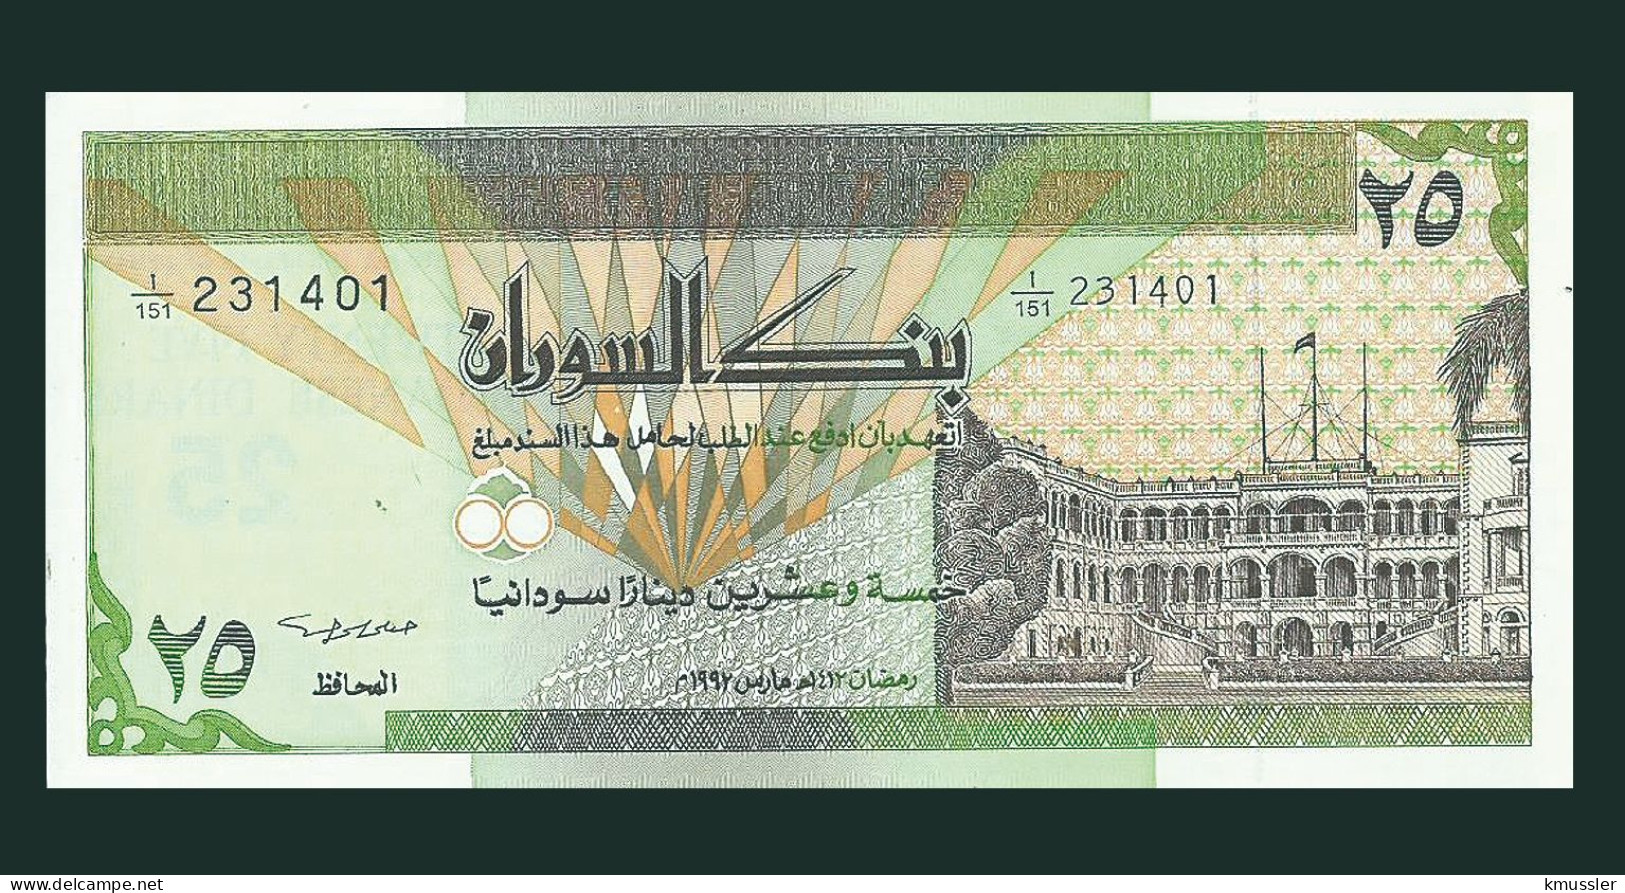 # # # Banknote Aus Sudan 100 Dinare 1992 (P-53) UNC # # # - Sudan